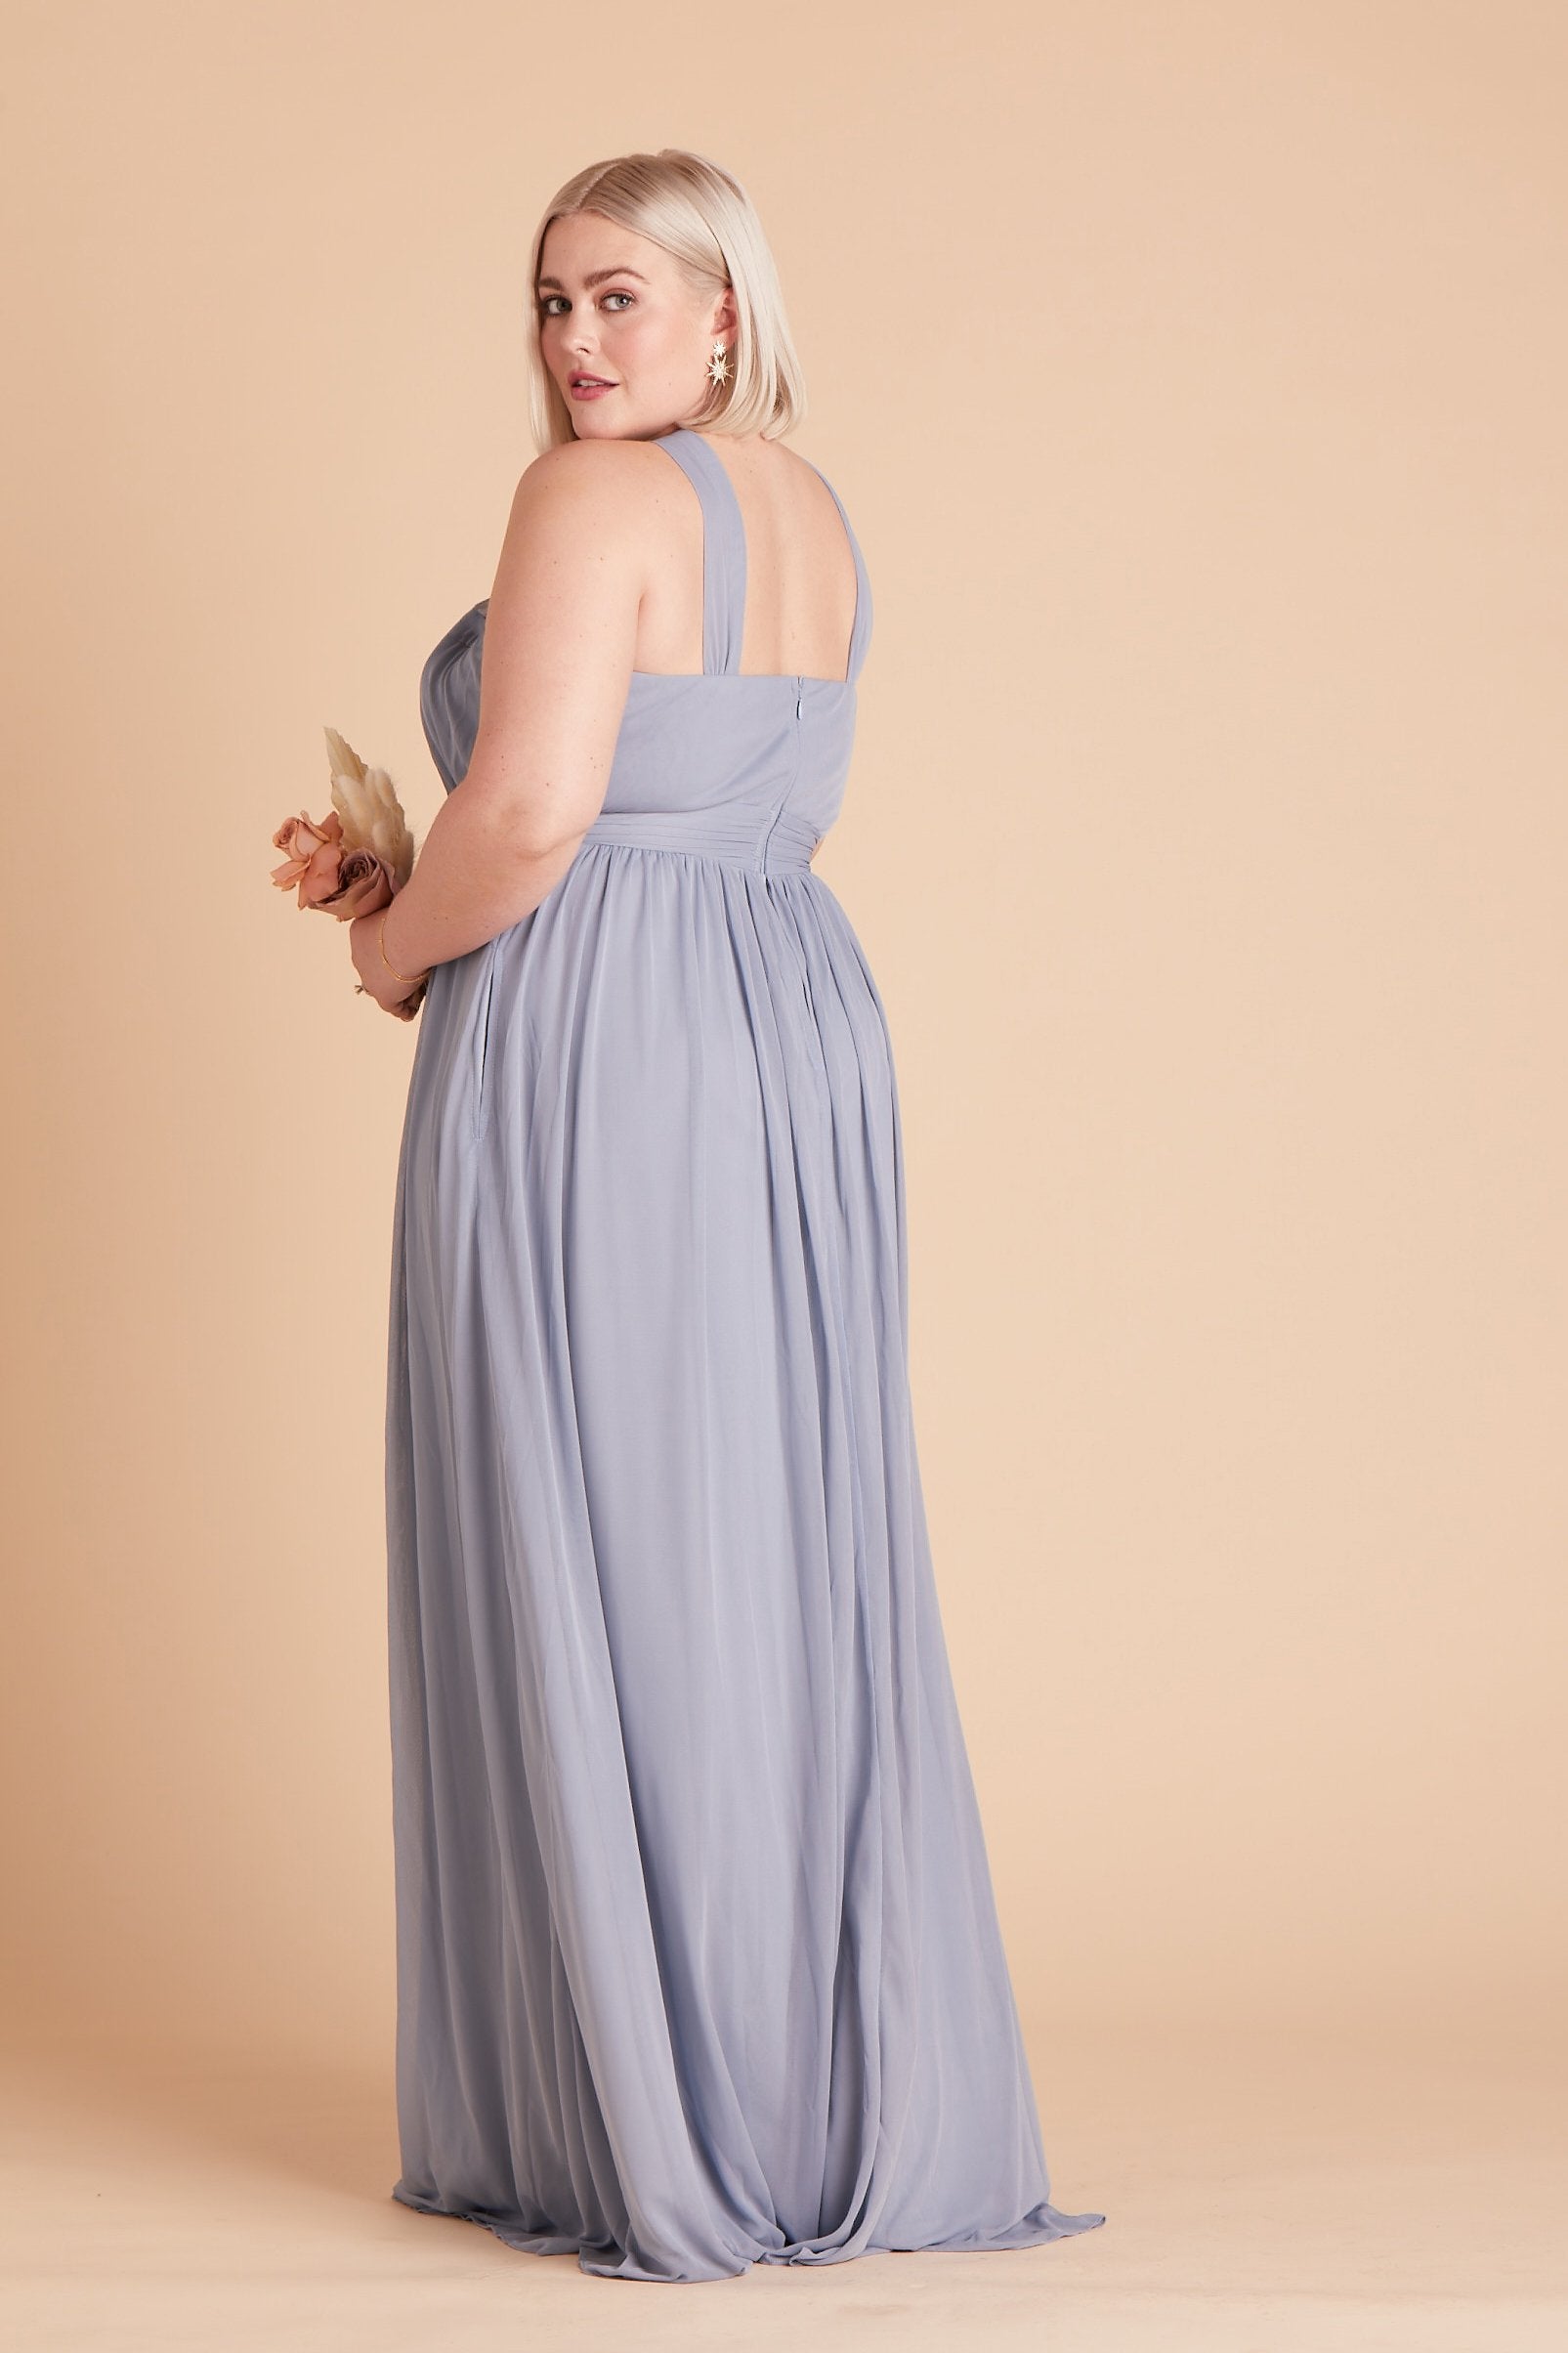 Kiko plus size bridesmaid dress in dusty blue chiffon by Birdy Grey, side view